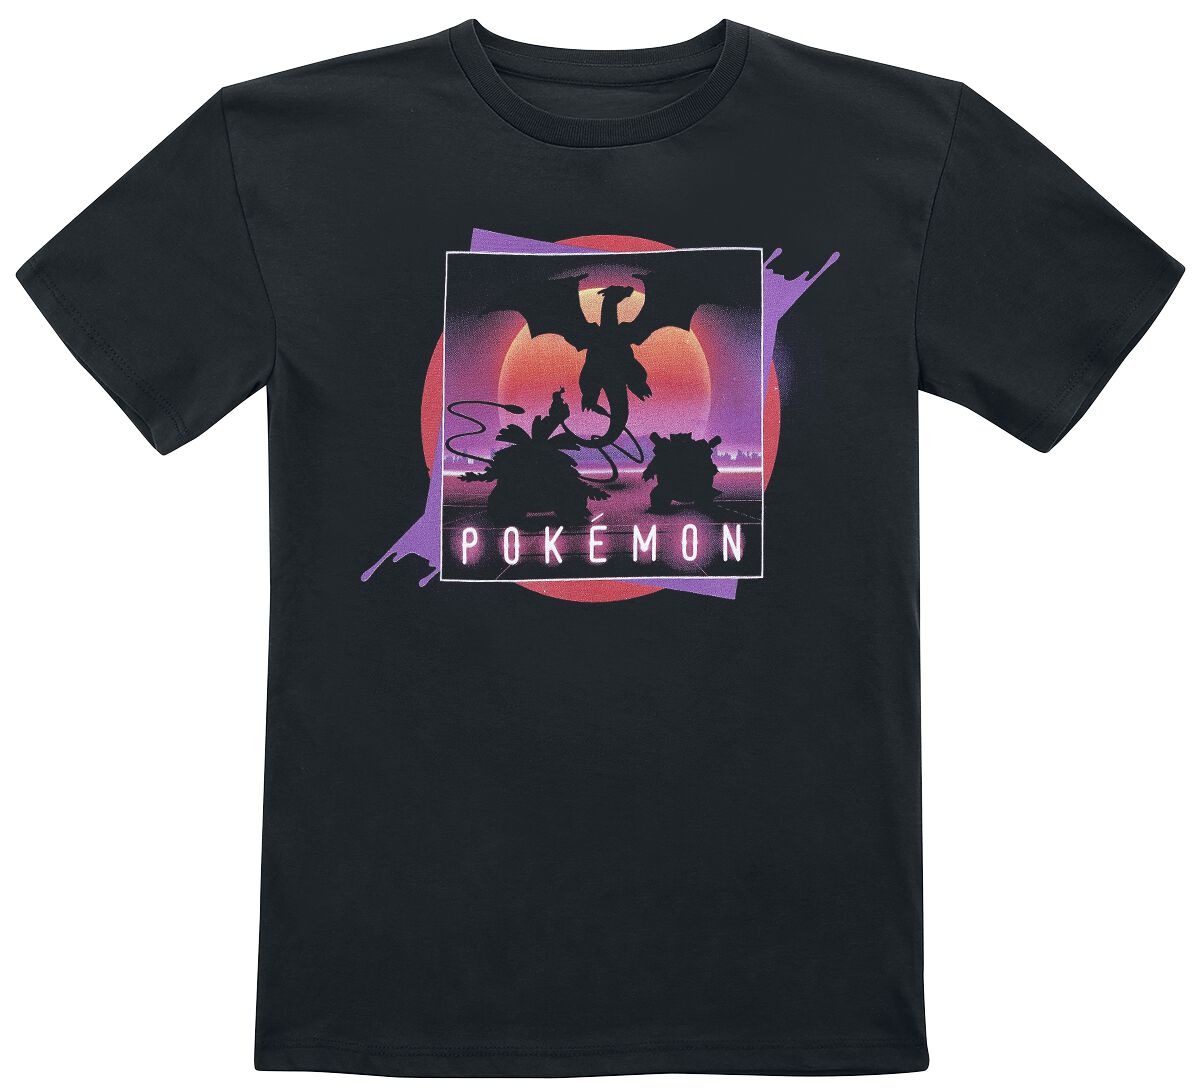 Pokémon Kids - Neon T-Shirt black